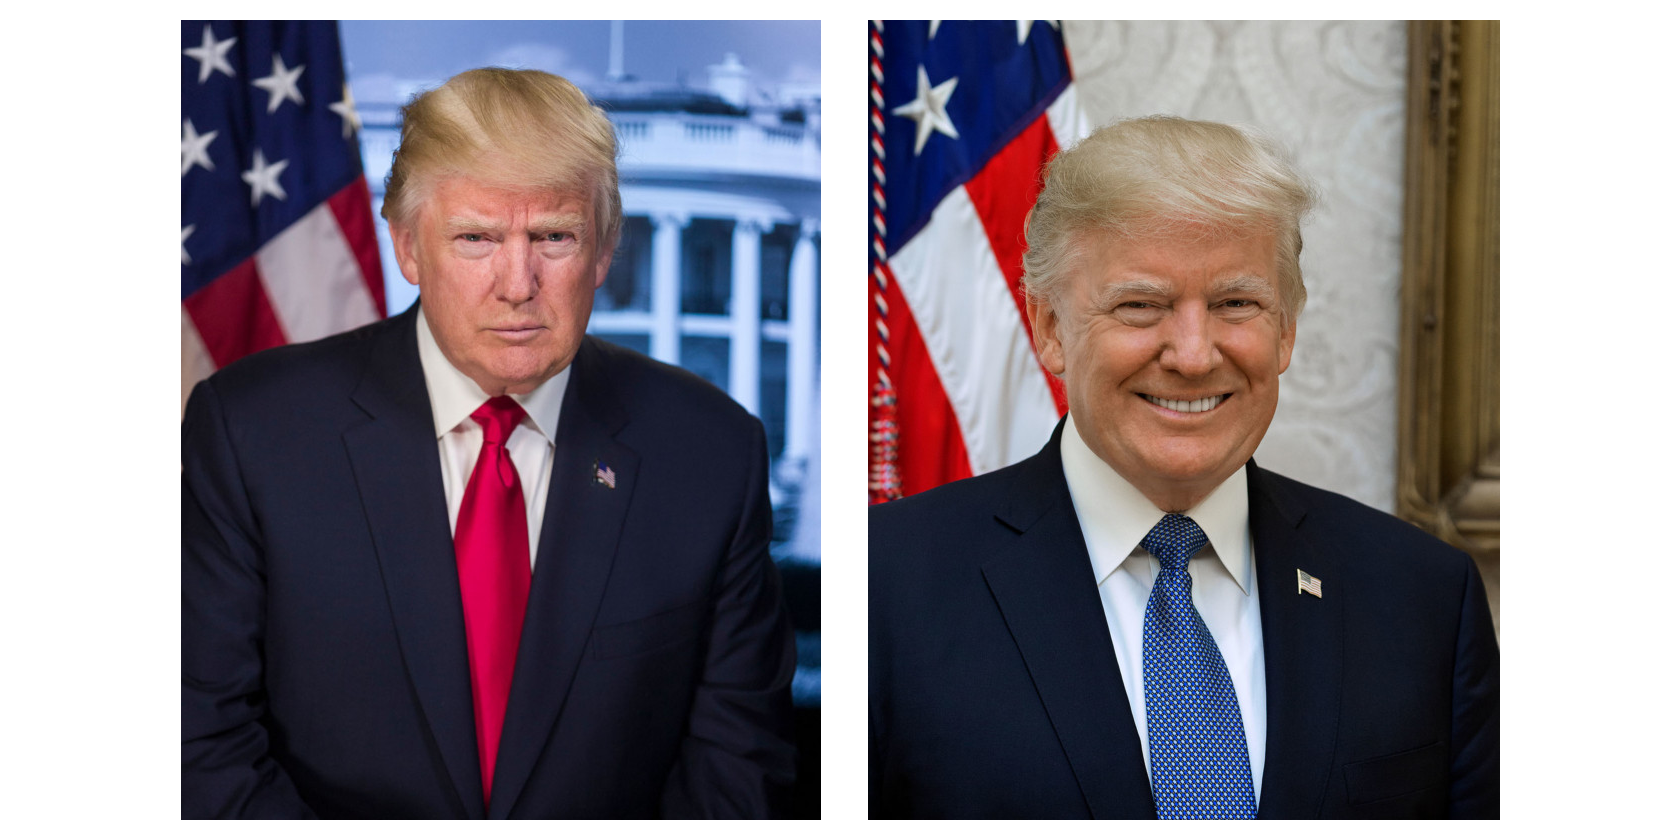 Trump's presidential photos